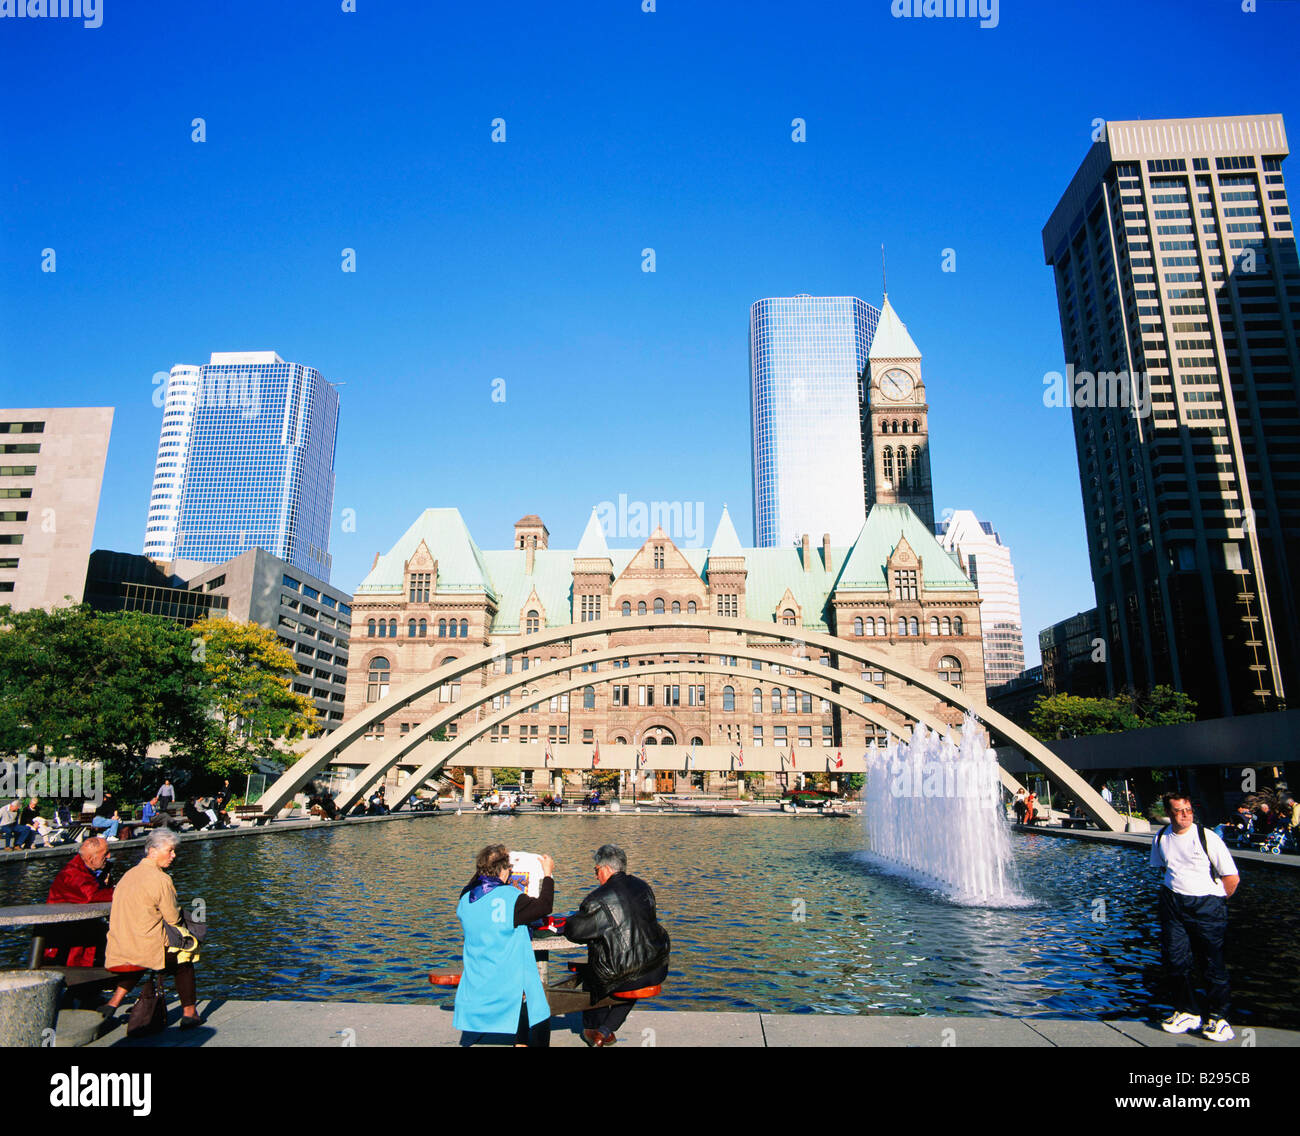 Kanada Toronto City Hall Datum 10 06 2008 Ref ZB709 114942 0001 obligatorische CREDIT Welt Bilder Photoshot Stockfoto